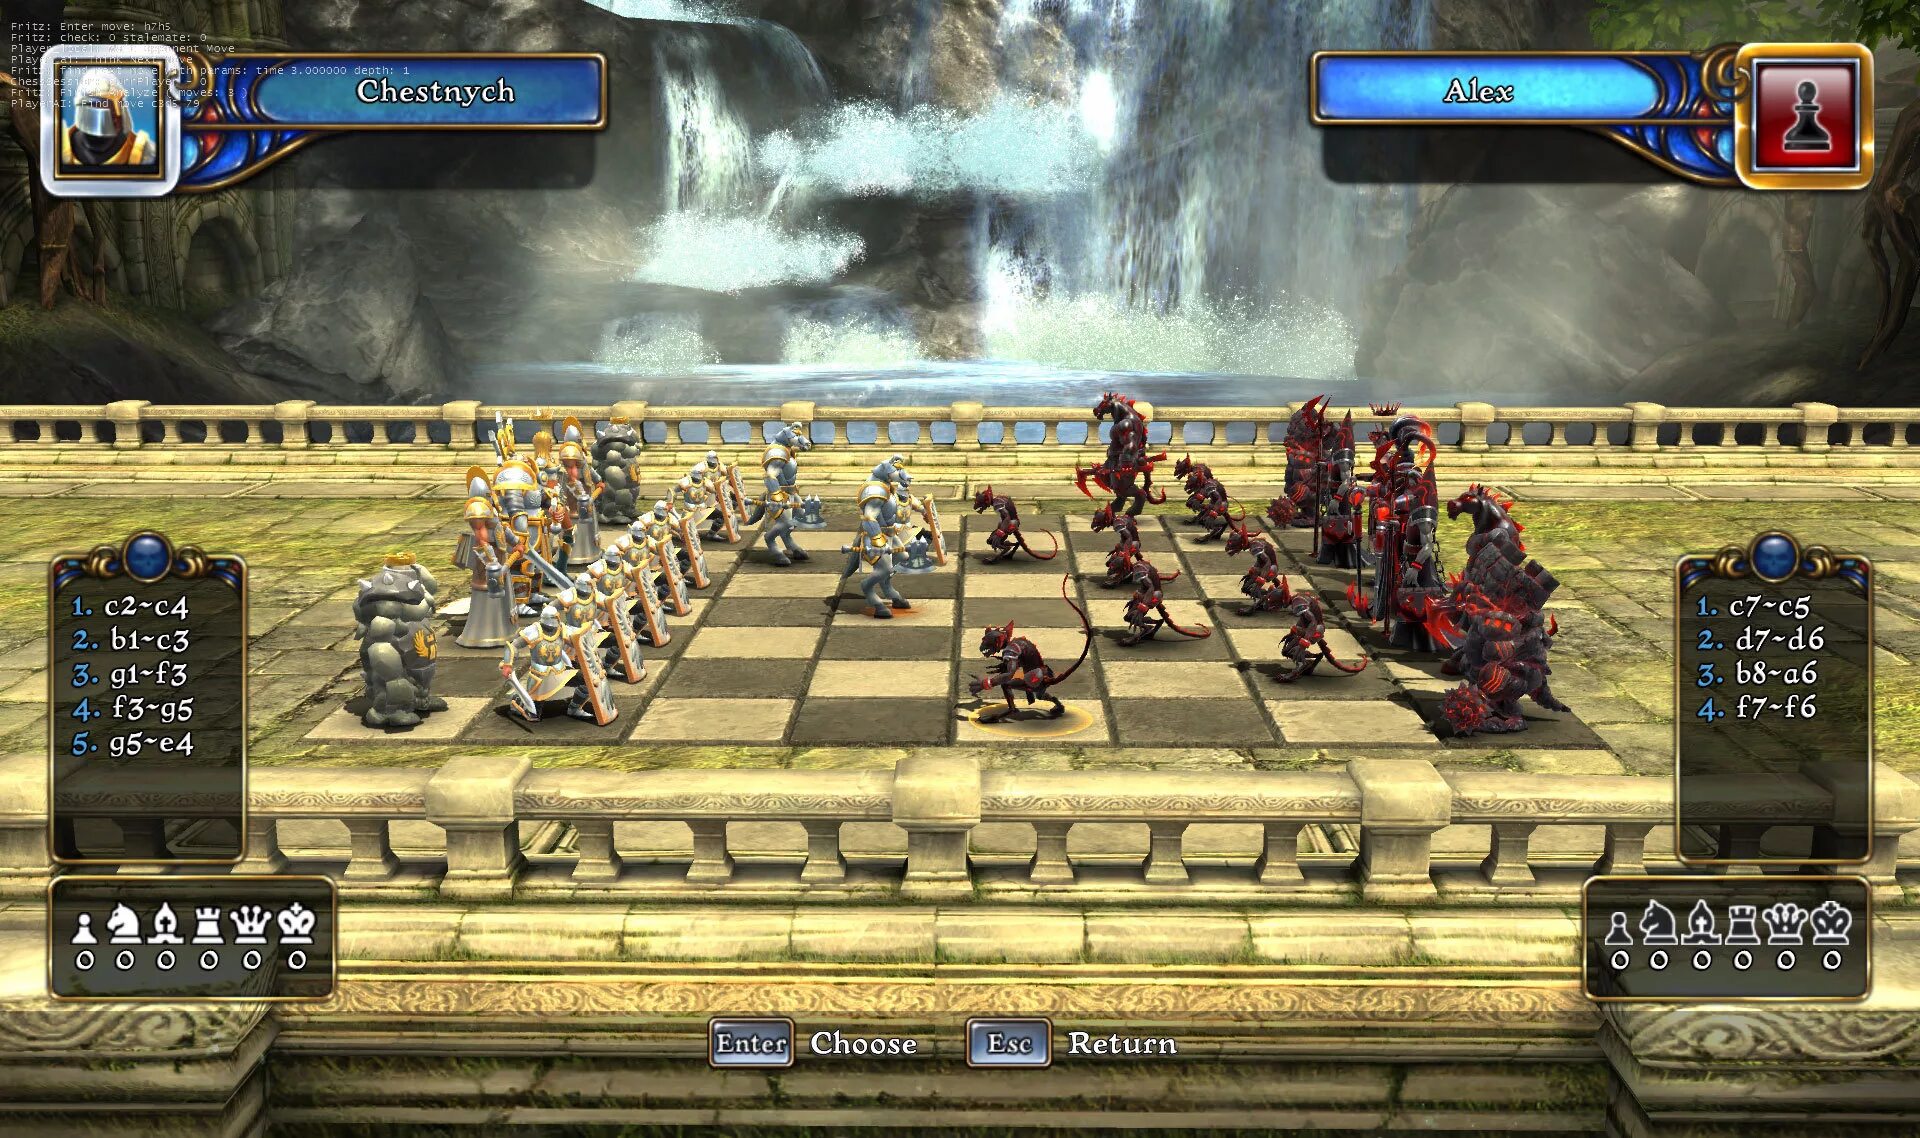 Игра Battle vs Chess. Battle Chess 1 игра. Battle vs Chess: Королевские битвы. Игры Battle Chess game of Kings.